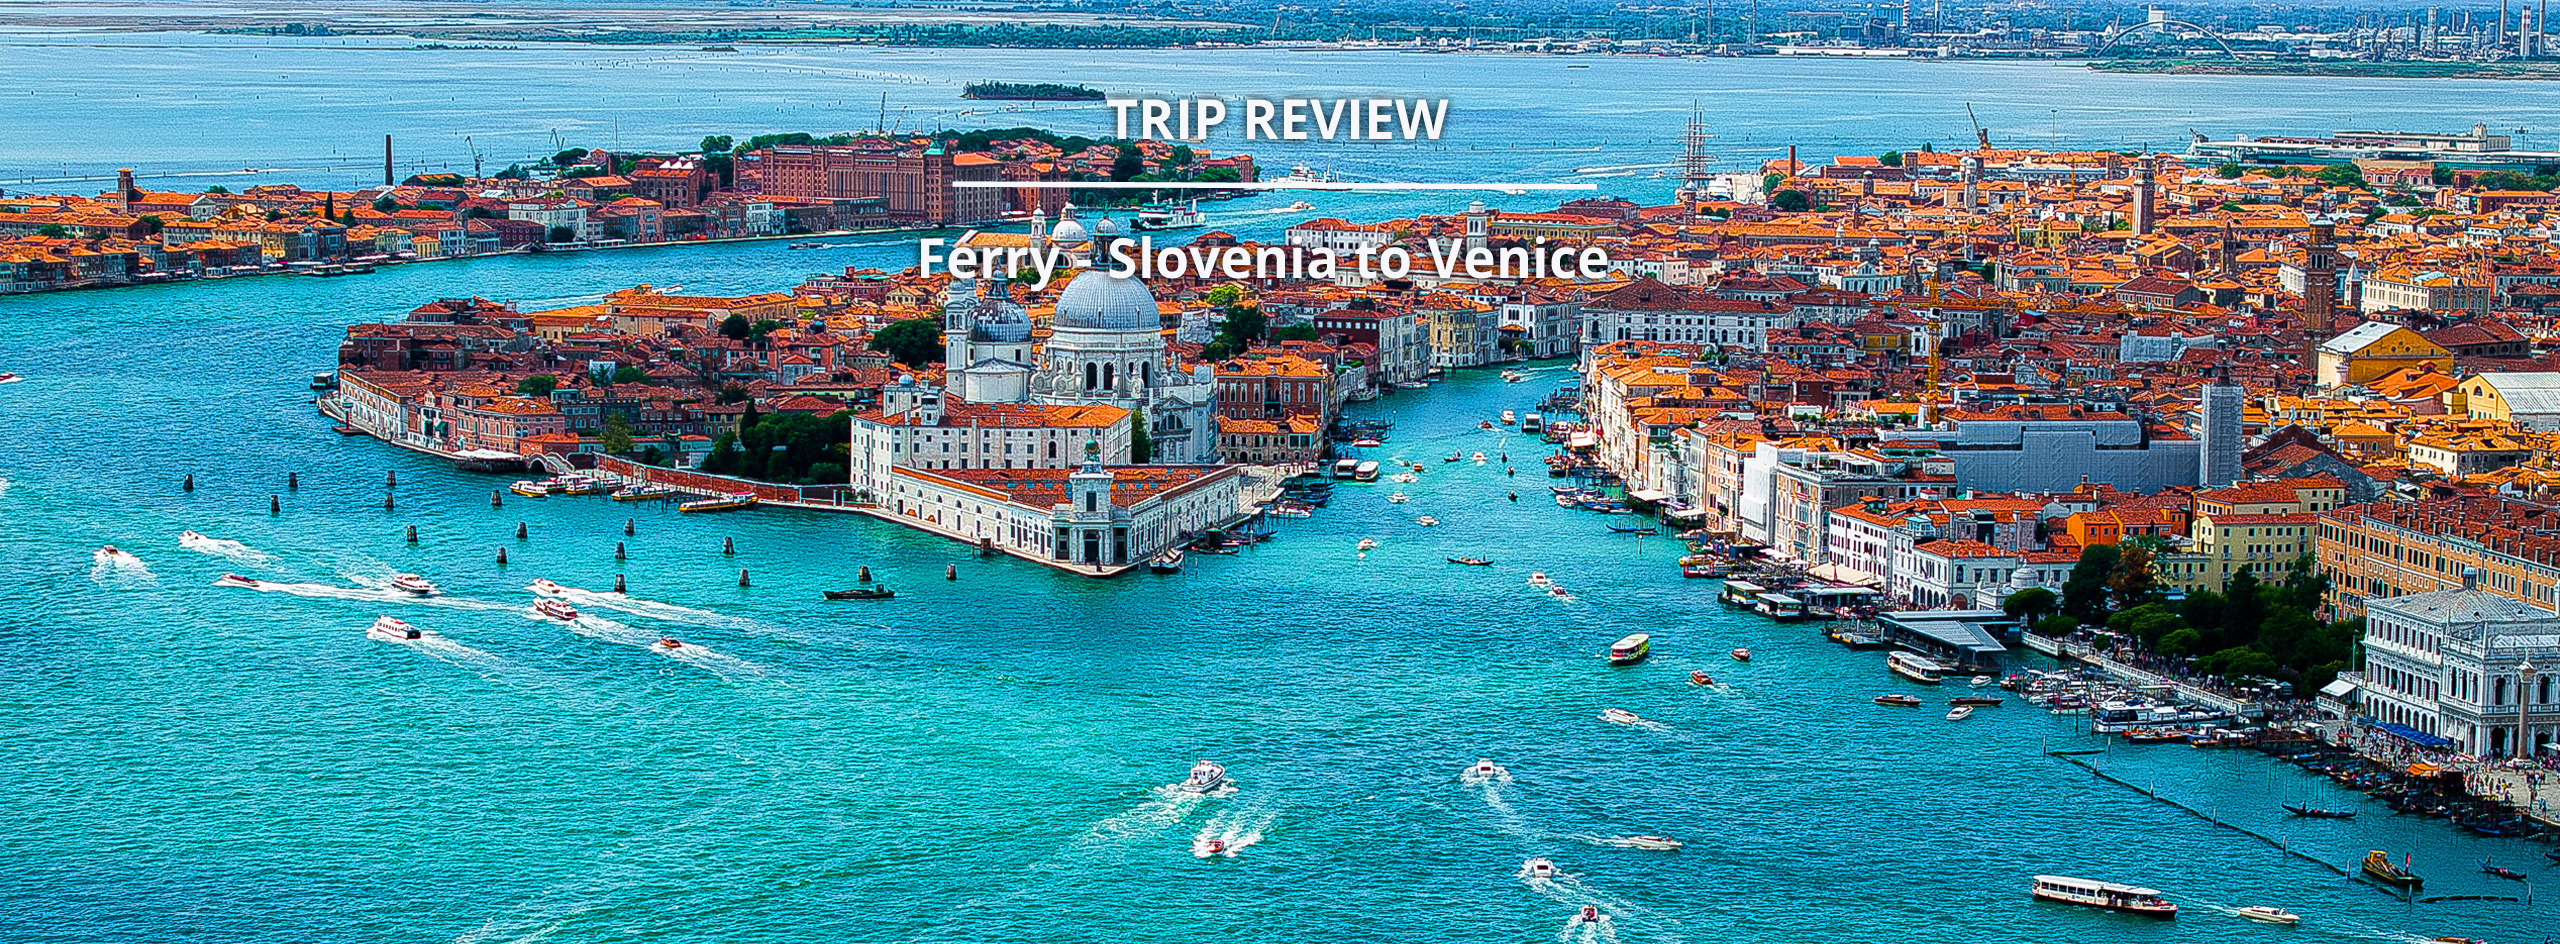 Triprovider Ferry Piran Slovenia Venice Italy Header